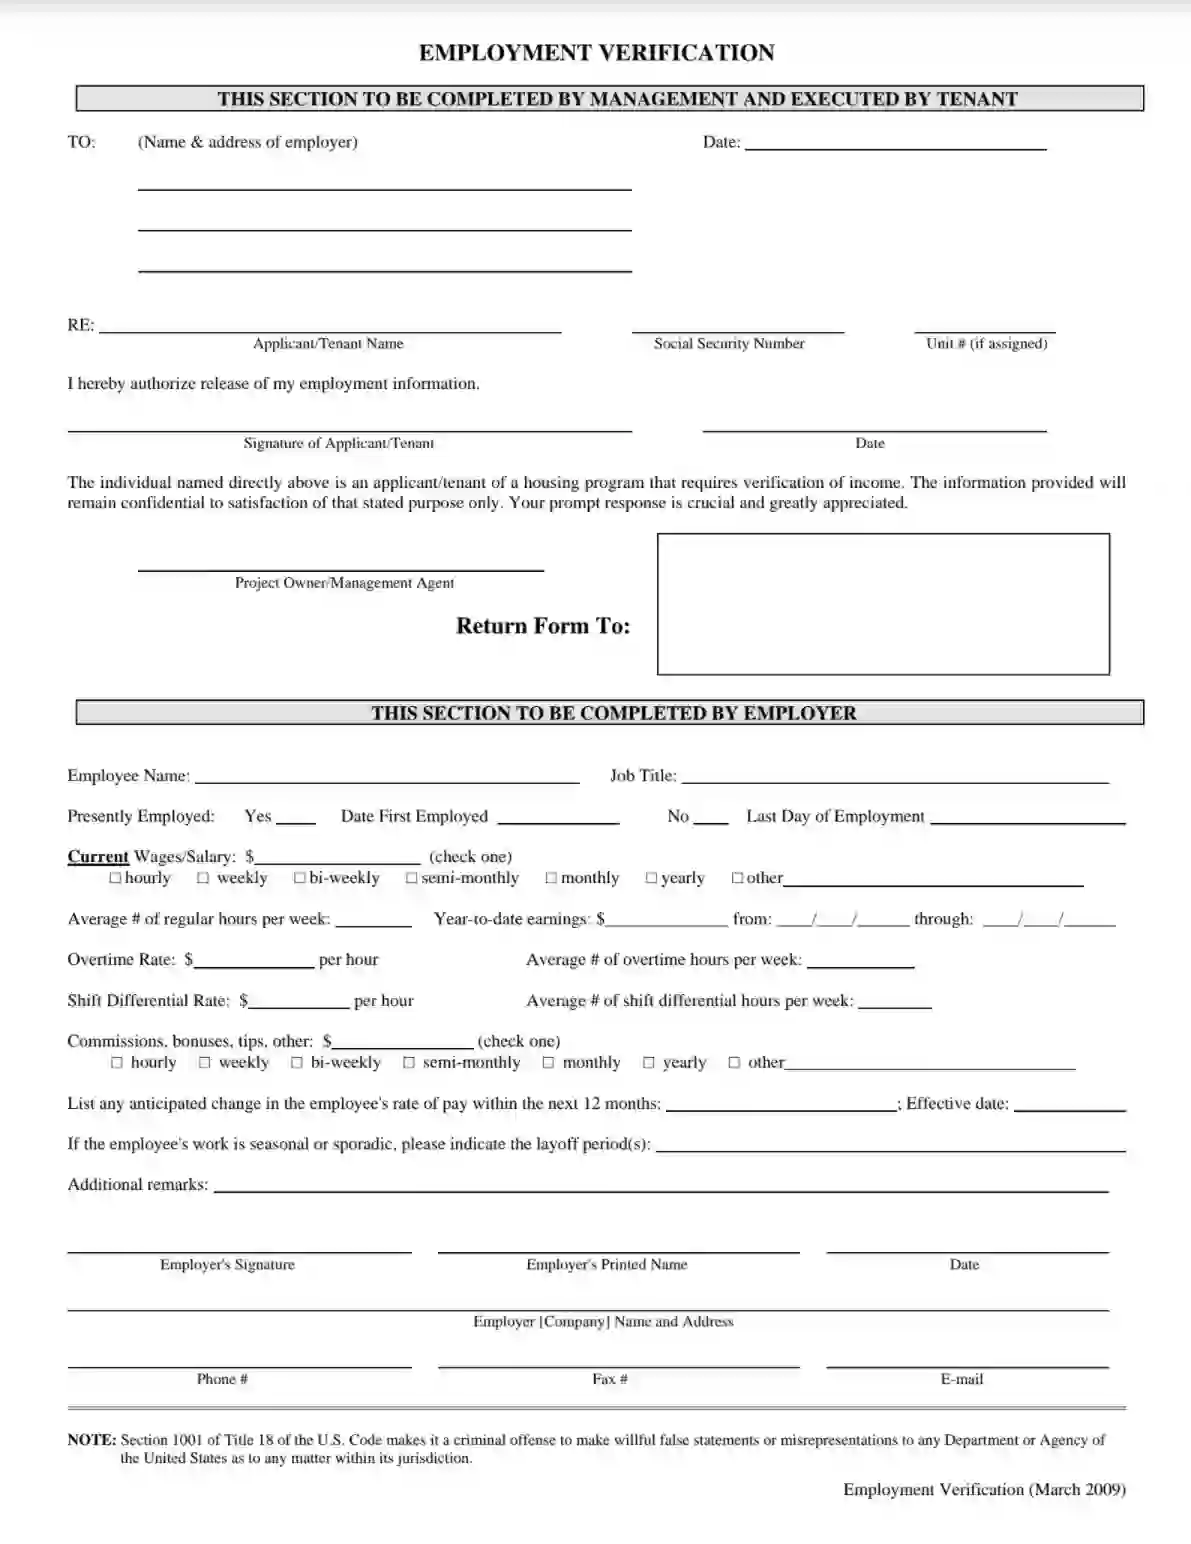 employment verification form